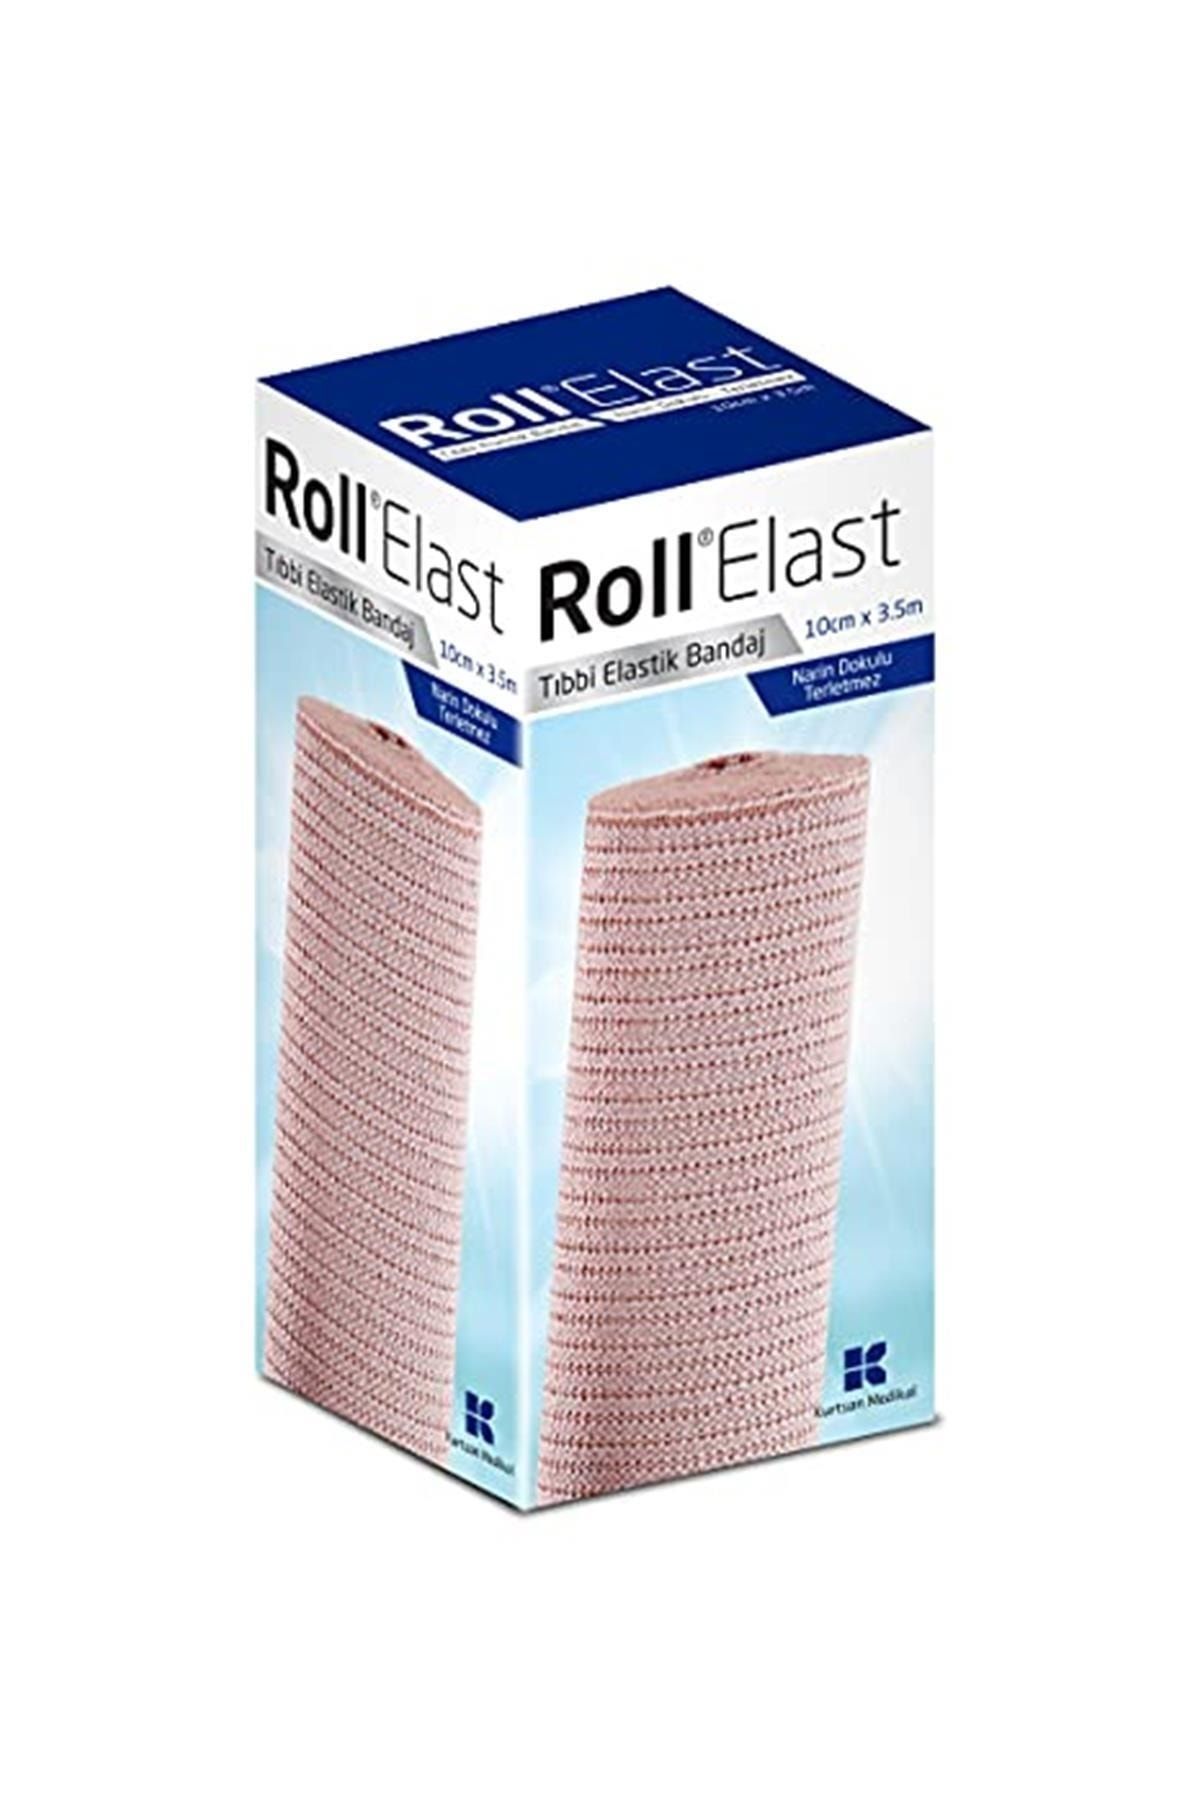 Roll Elastik Bandaj 10 Cm X 3.5 M